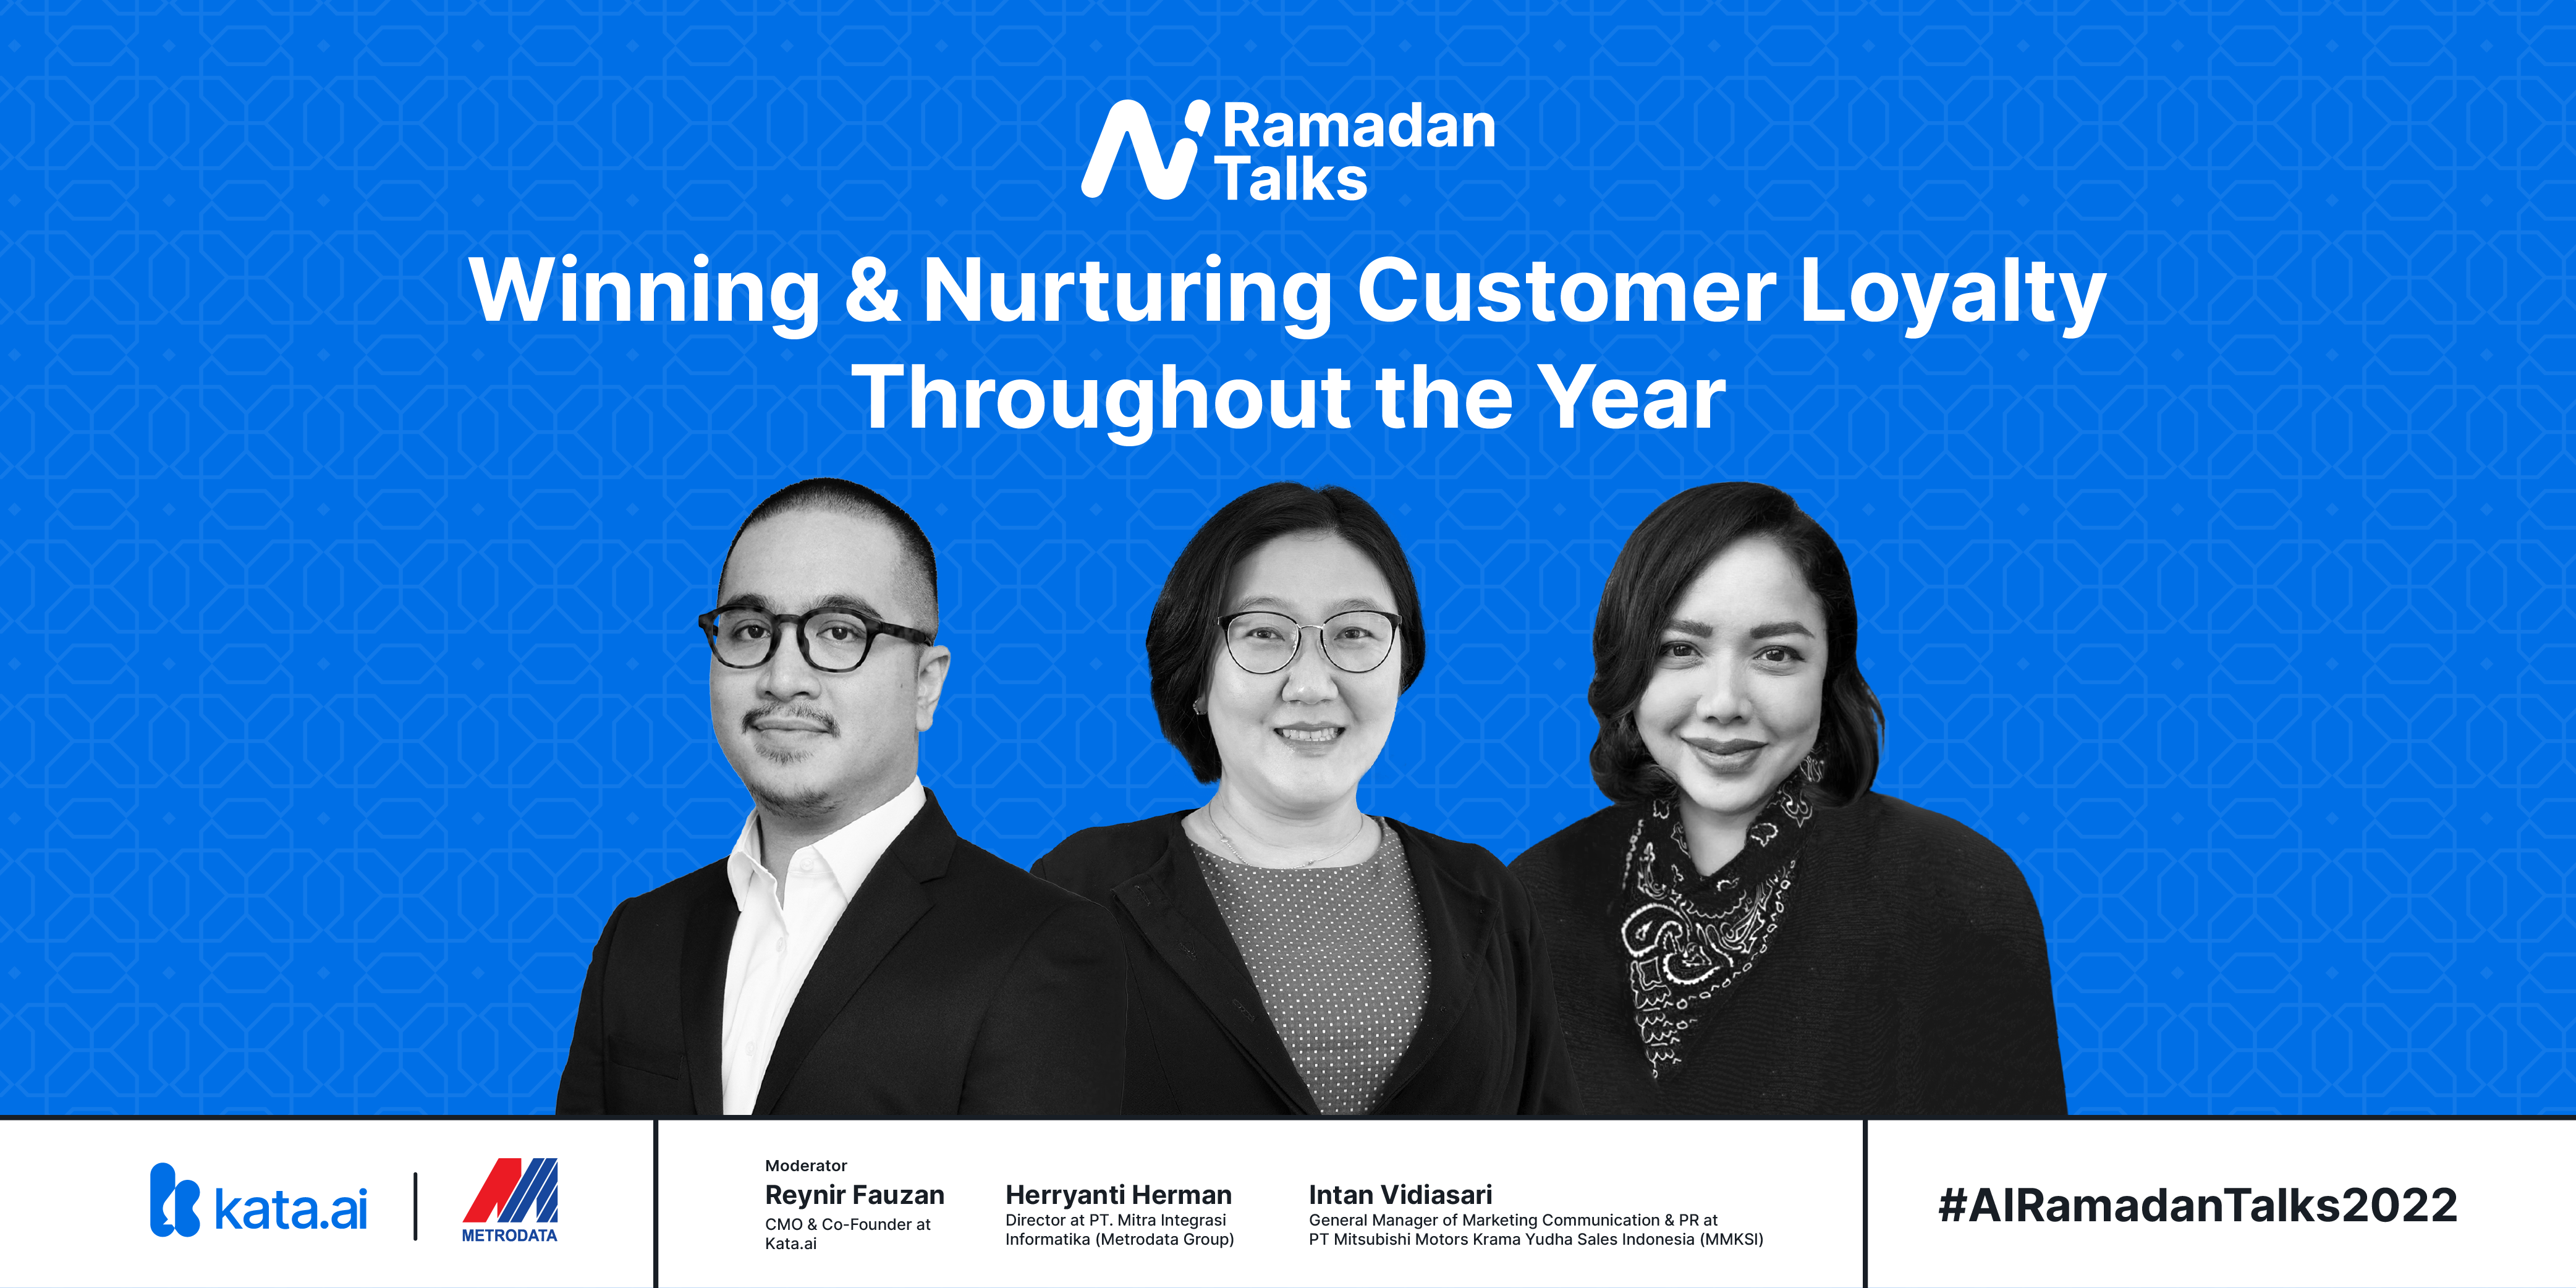 AI Ramadan Talks: Winning & Nurturing Customer Loyalty Throughout The Year